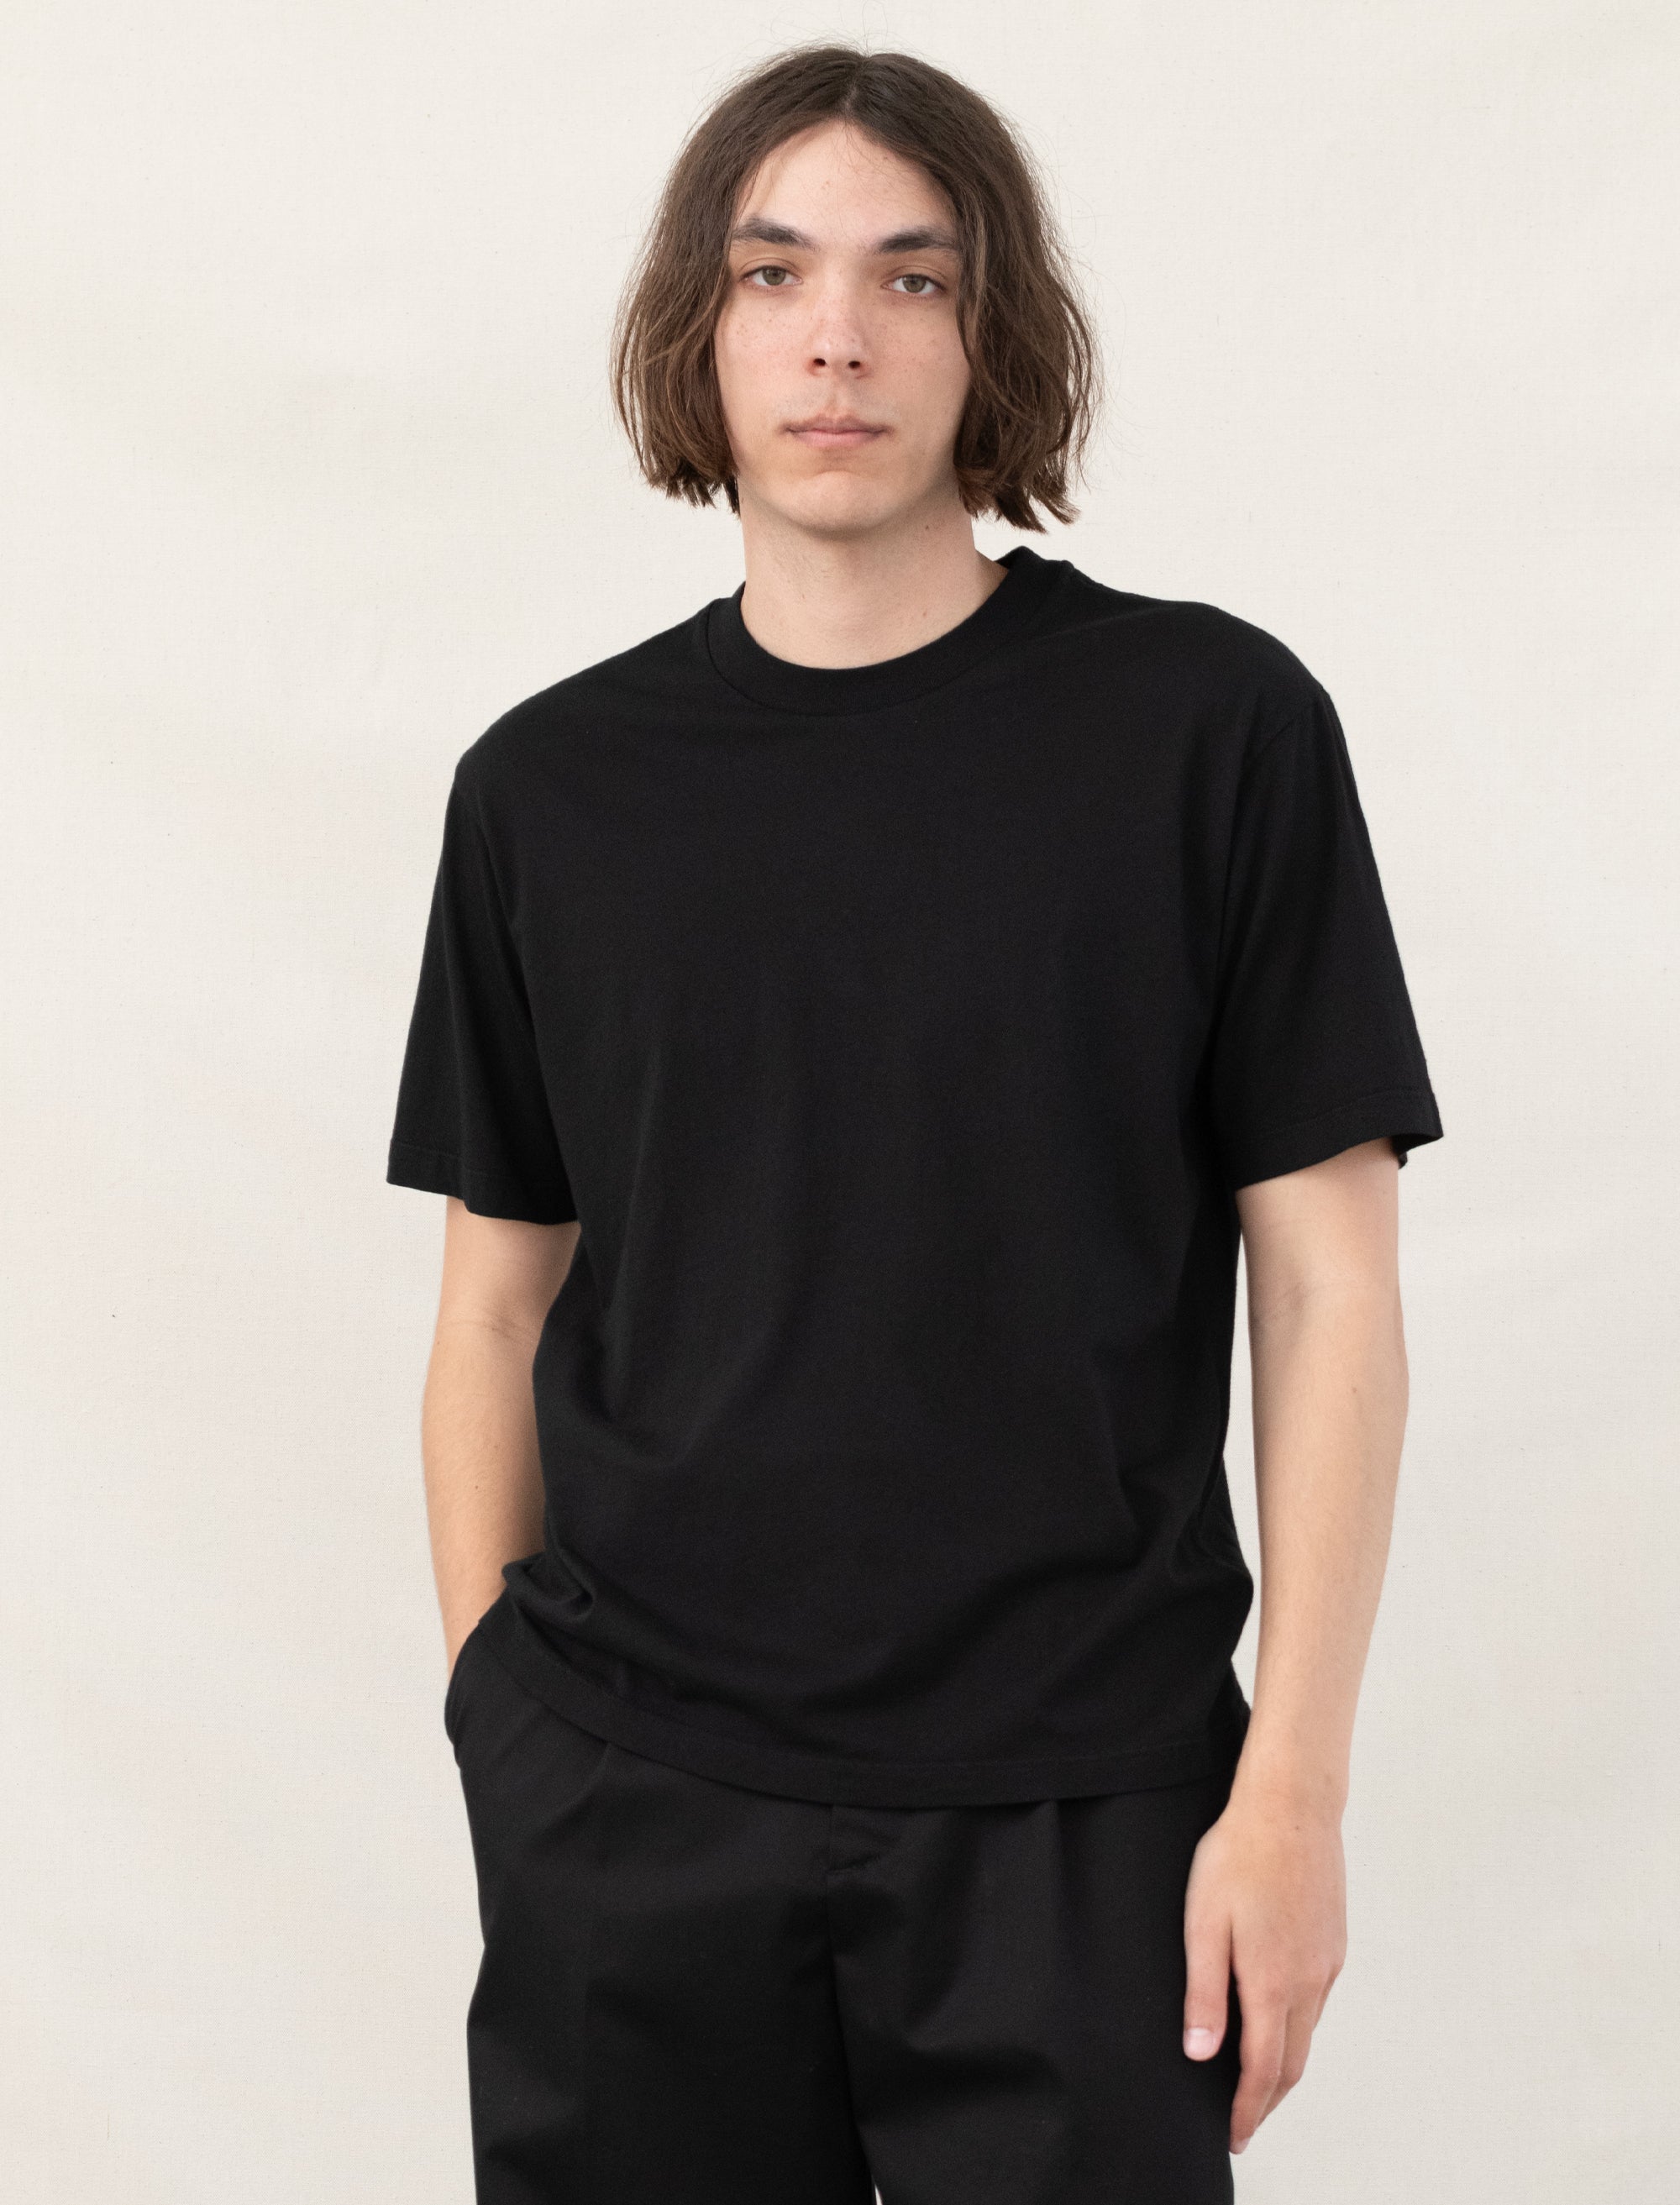 Athens T-Shirt (Black)